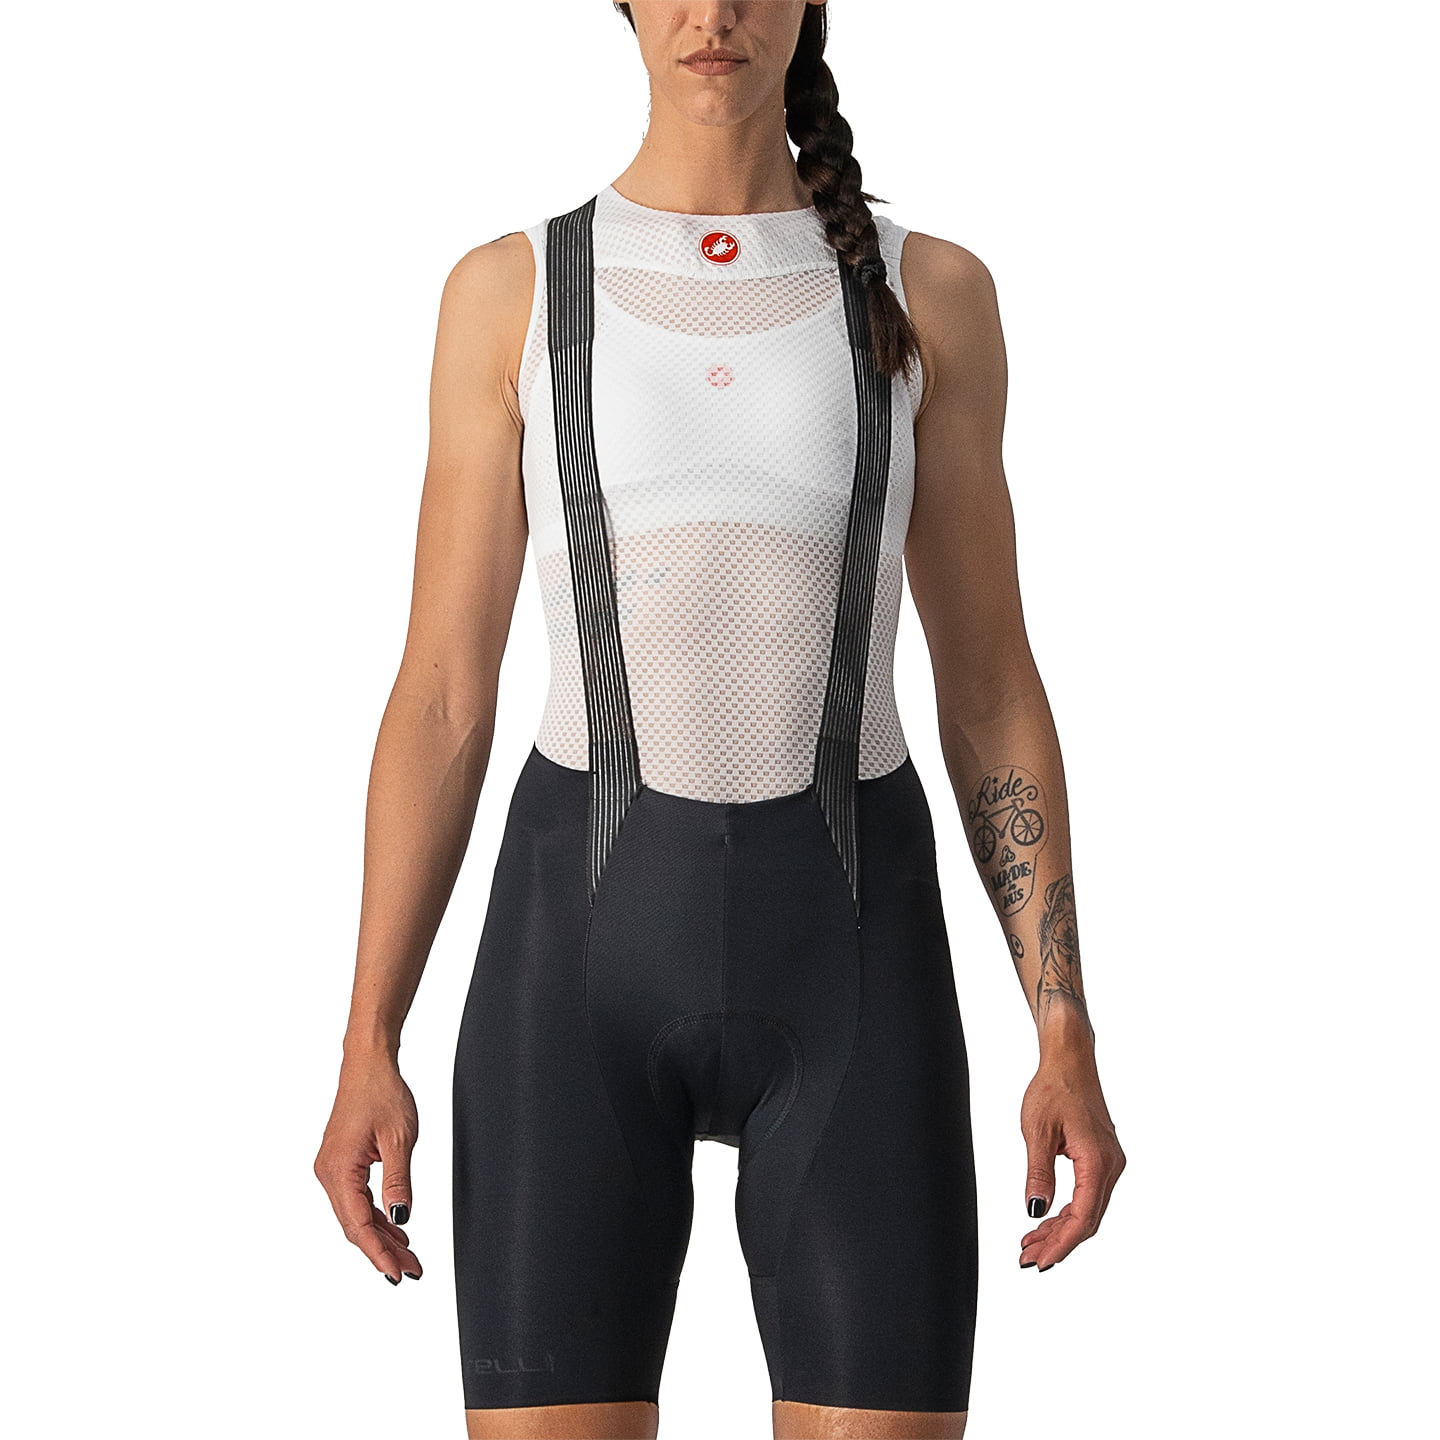 CASTELLI Free Aero RC Women’s Bib Shorts Women’s Bib Shorts, size M, Cycle shorts, Cycling clothing